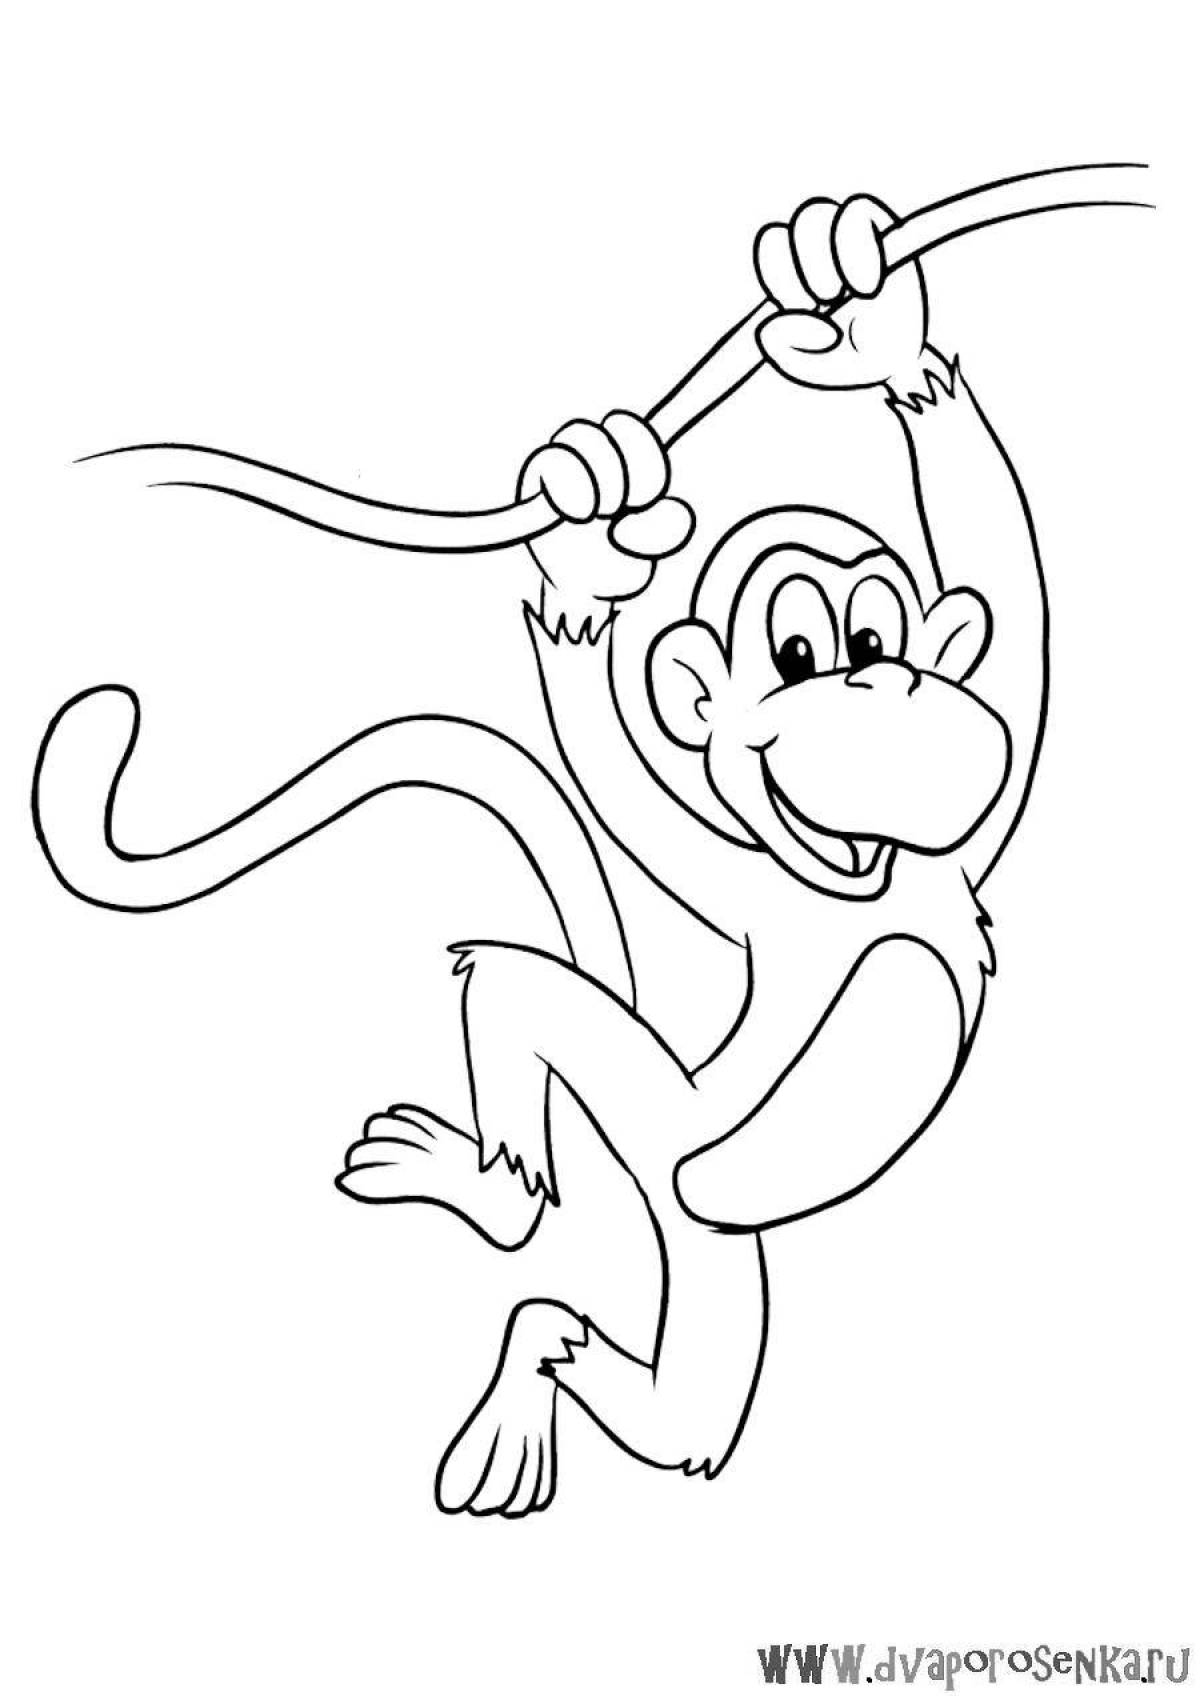 Chimpanzee fun coloring book for kids